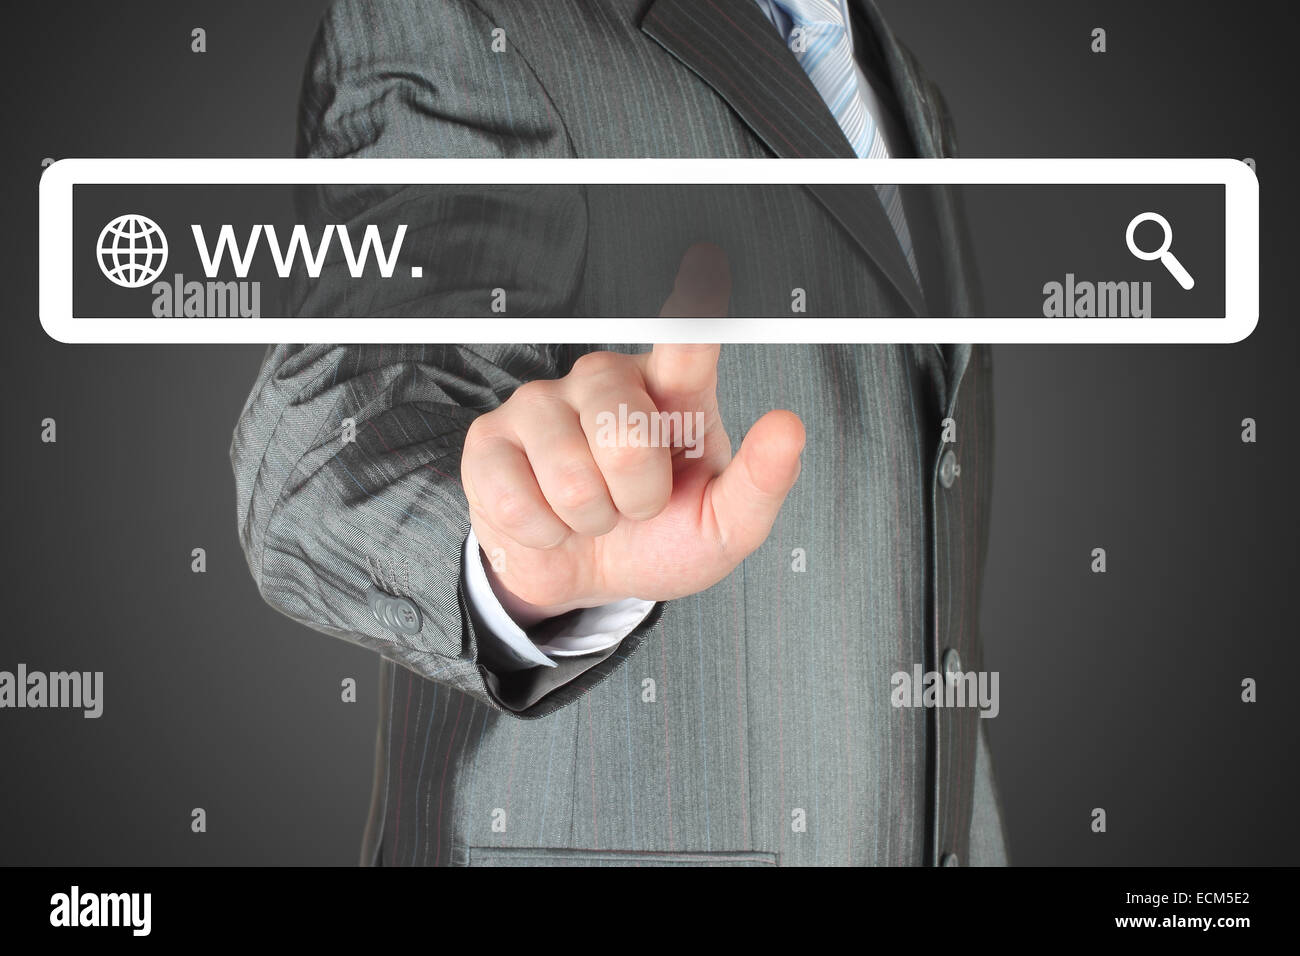 Businessman pushing virtual search bar on black background, internet concept Stock Photo